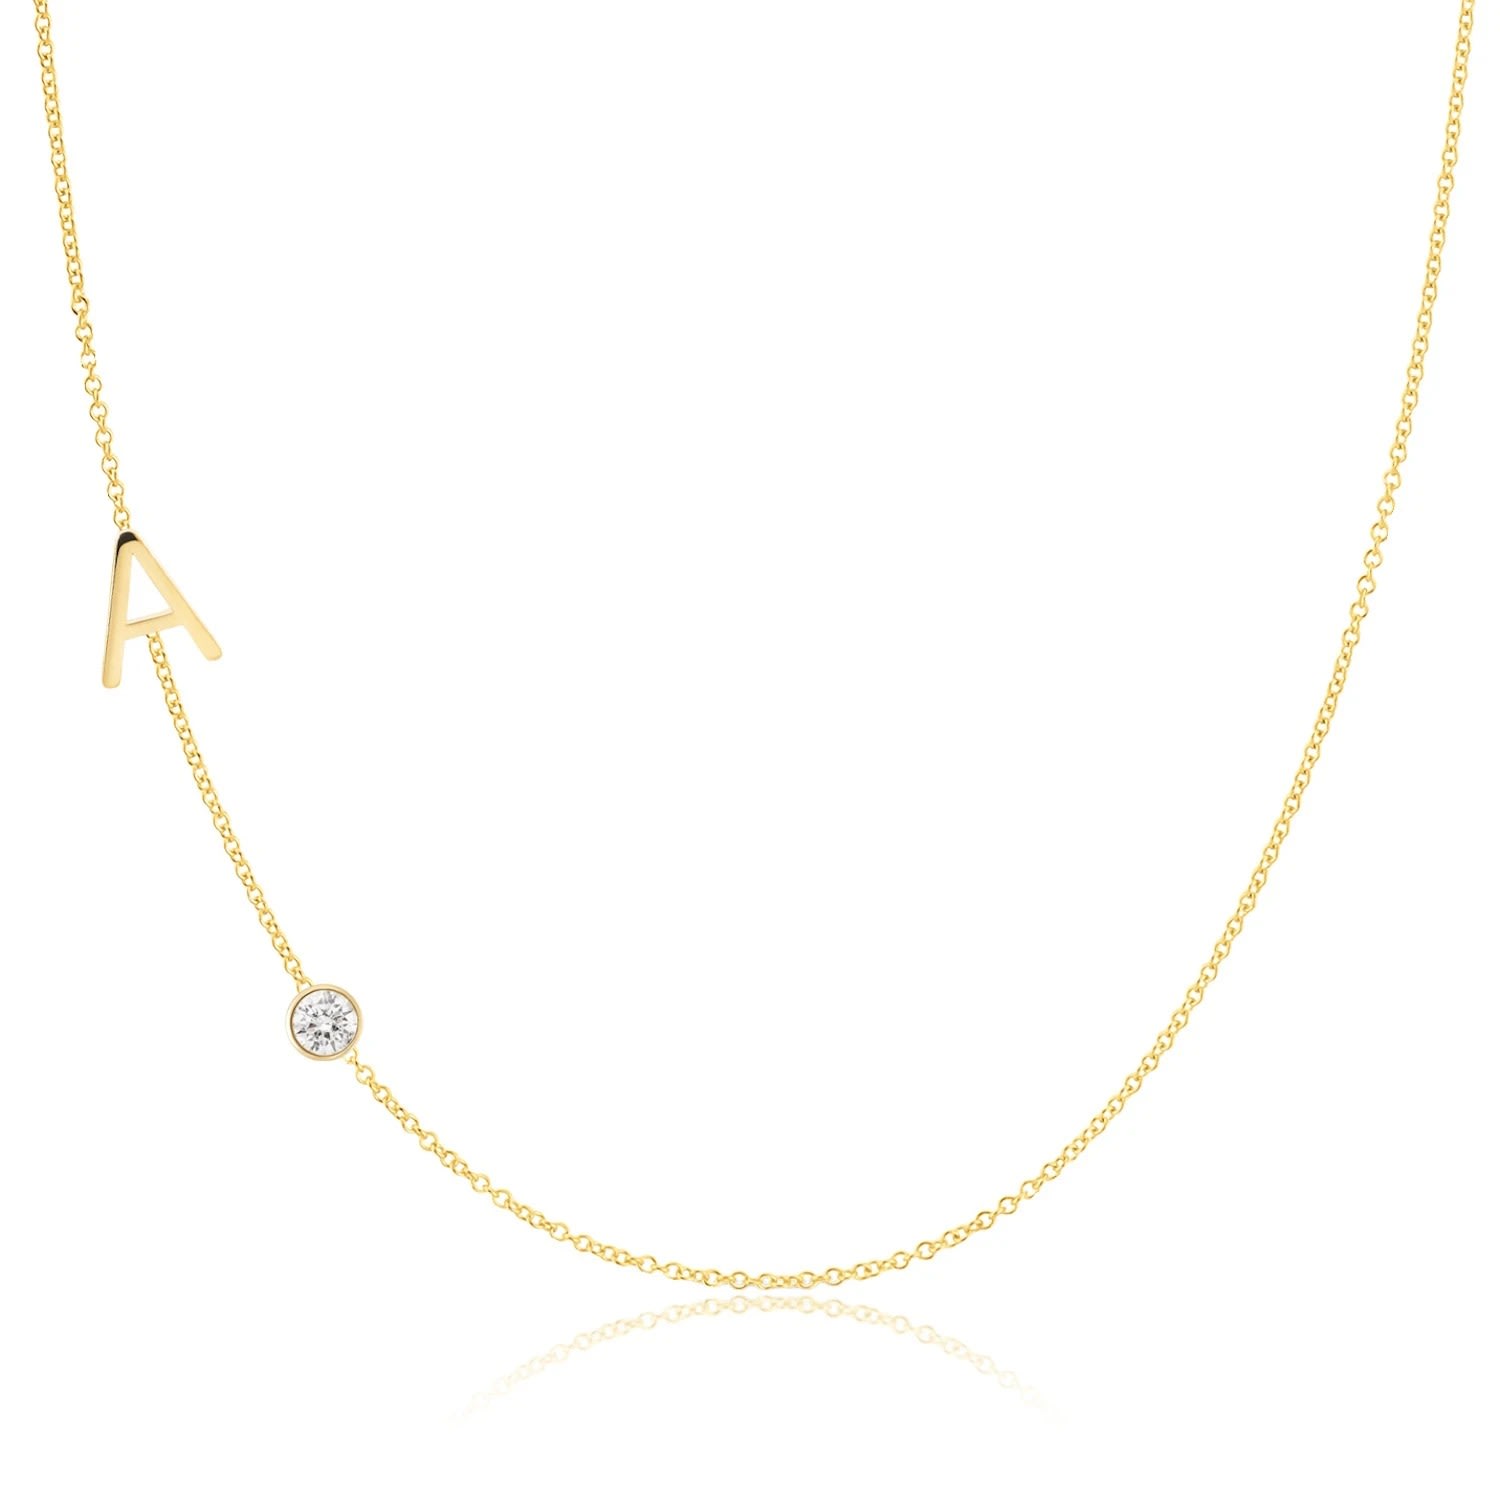 Women’s Monogram Necklace With Diamond - Yellow Gold - 18" Maya Brenner